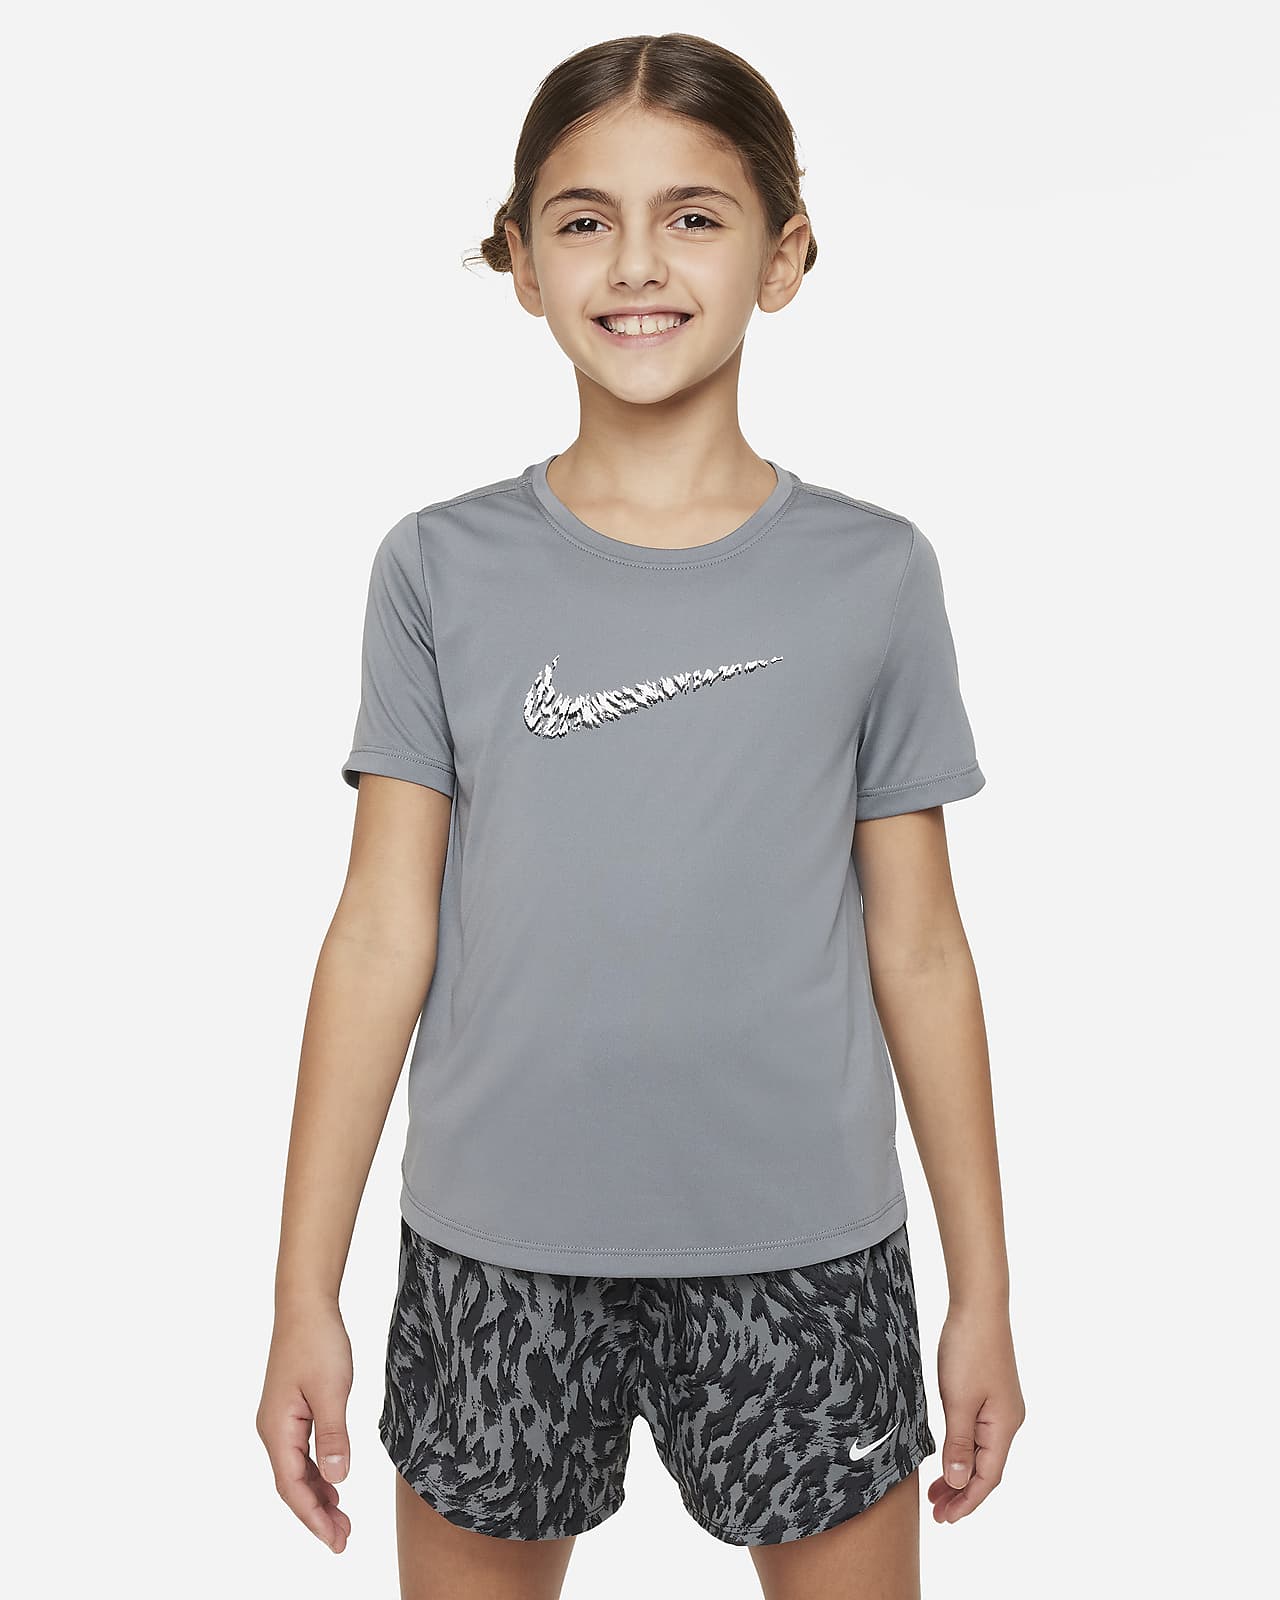 Nike One trainingstop met korte mouwen voor meisjes